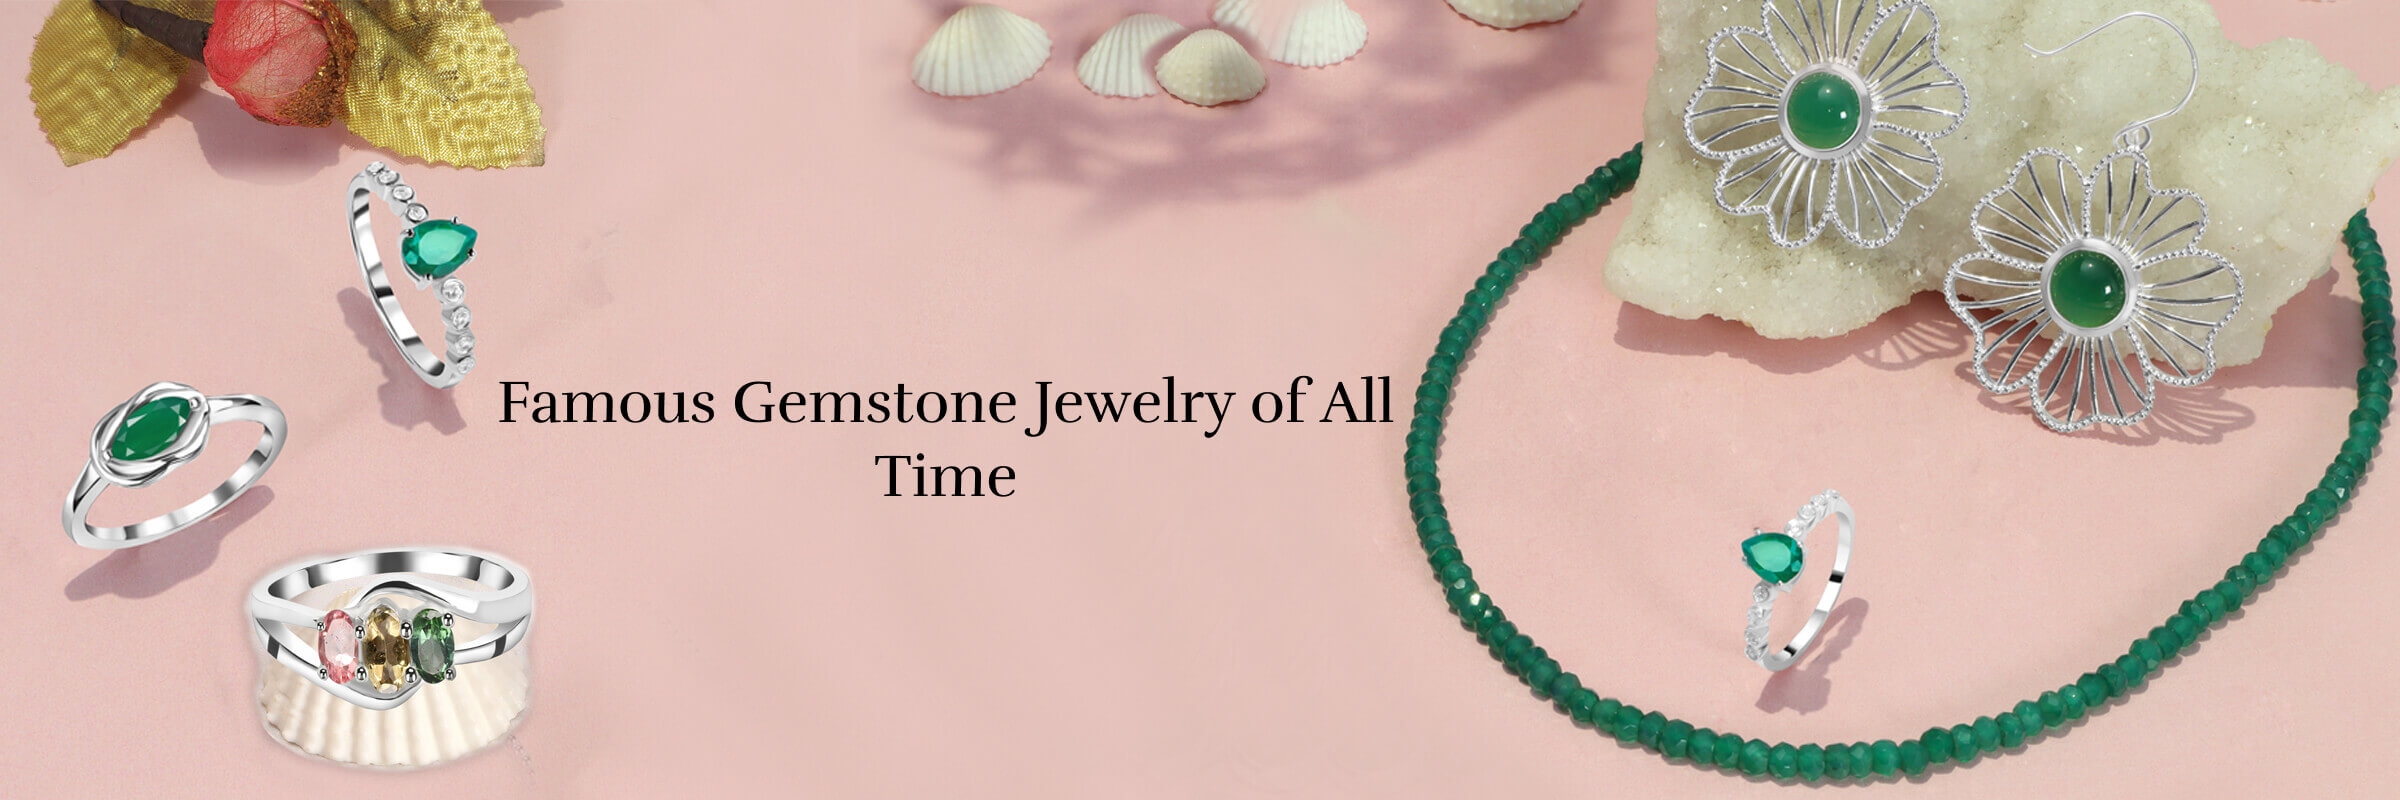 famous Gemstone Jewelry pieces worn by celebs